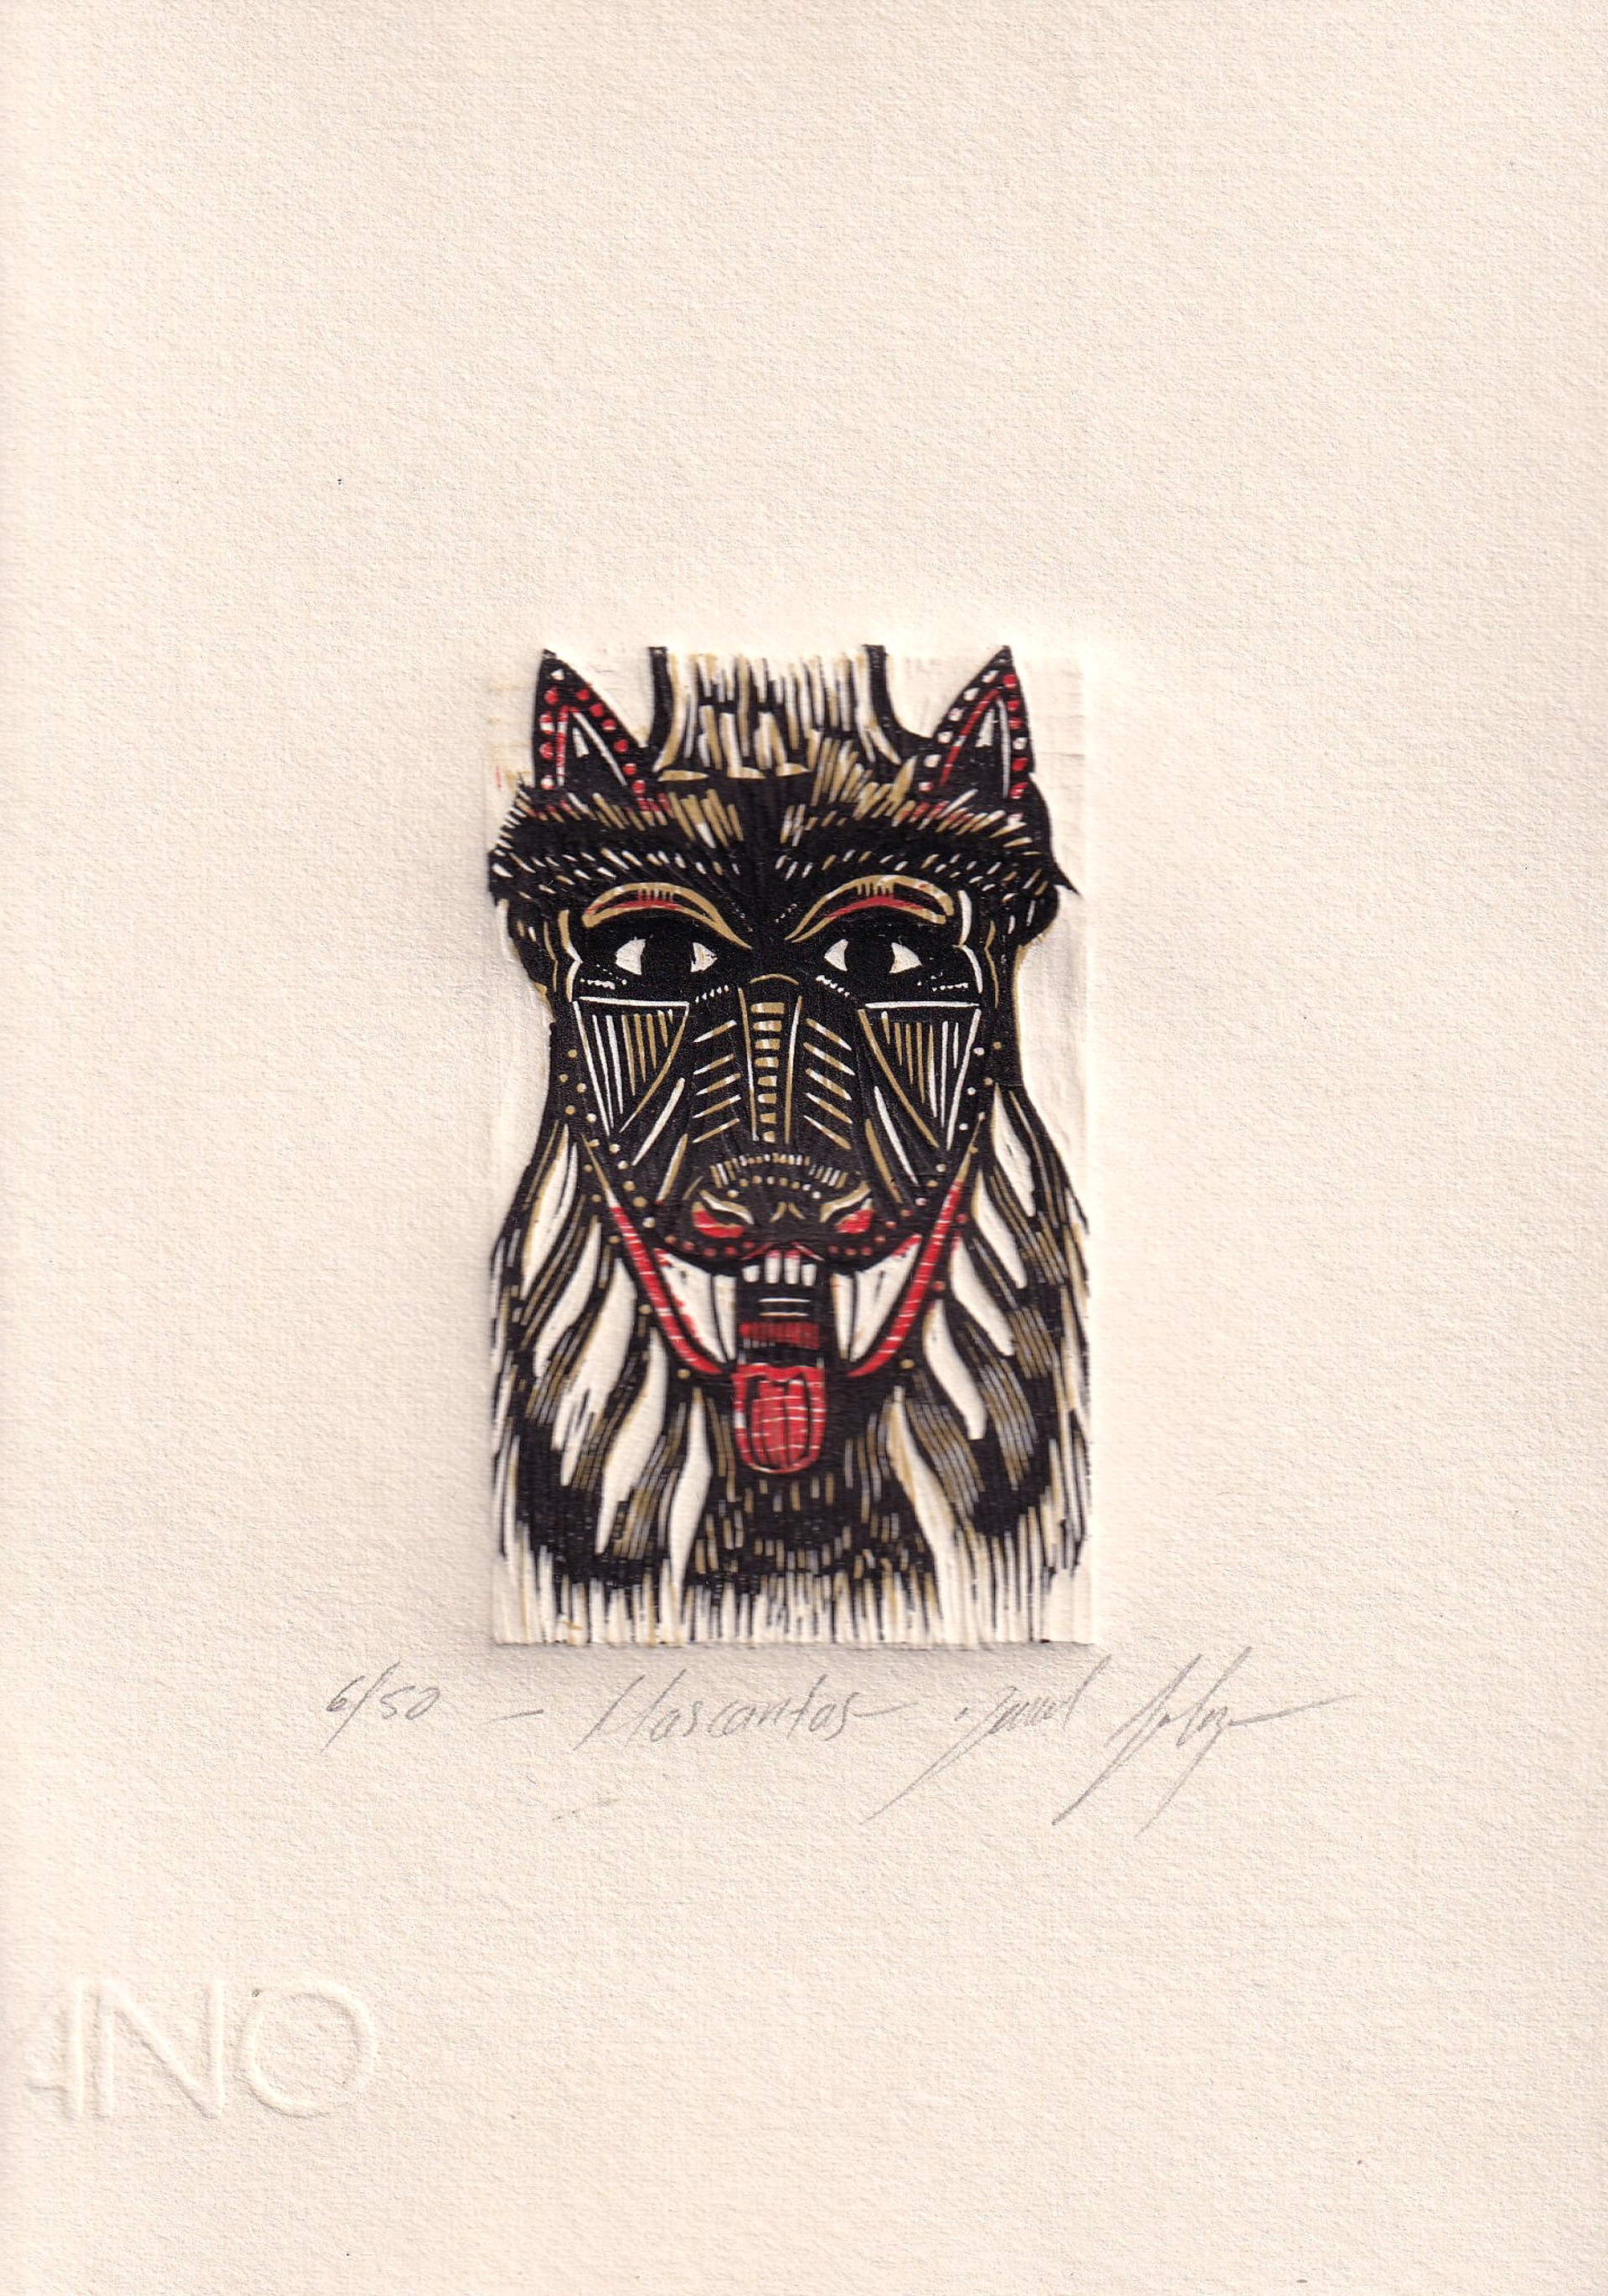 Mascaritas (Lobo) by Daniel Salazar